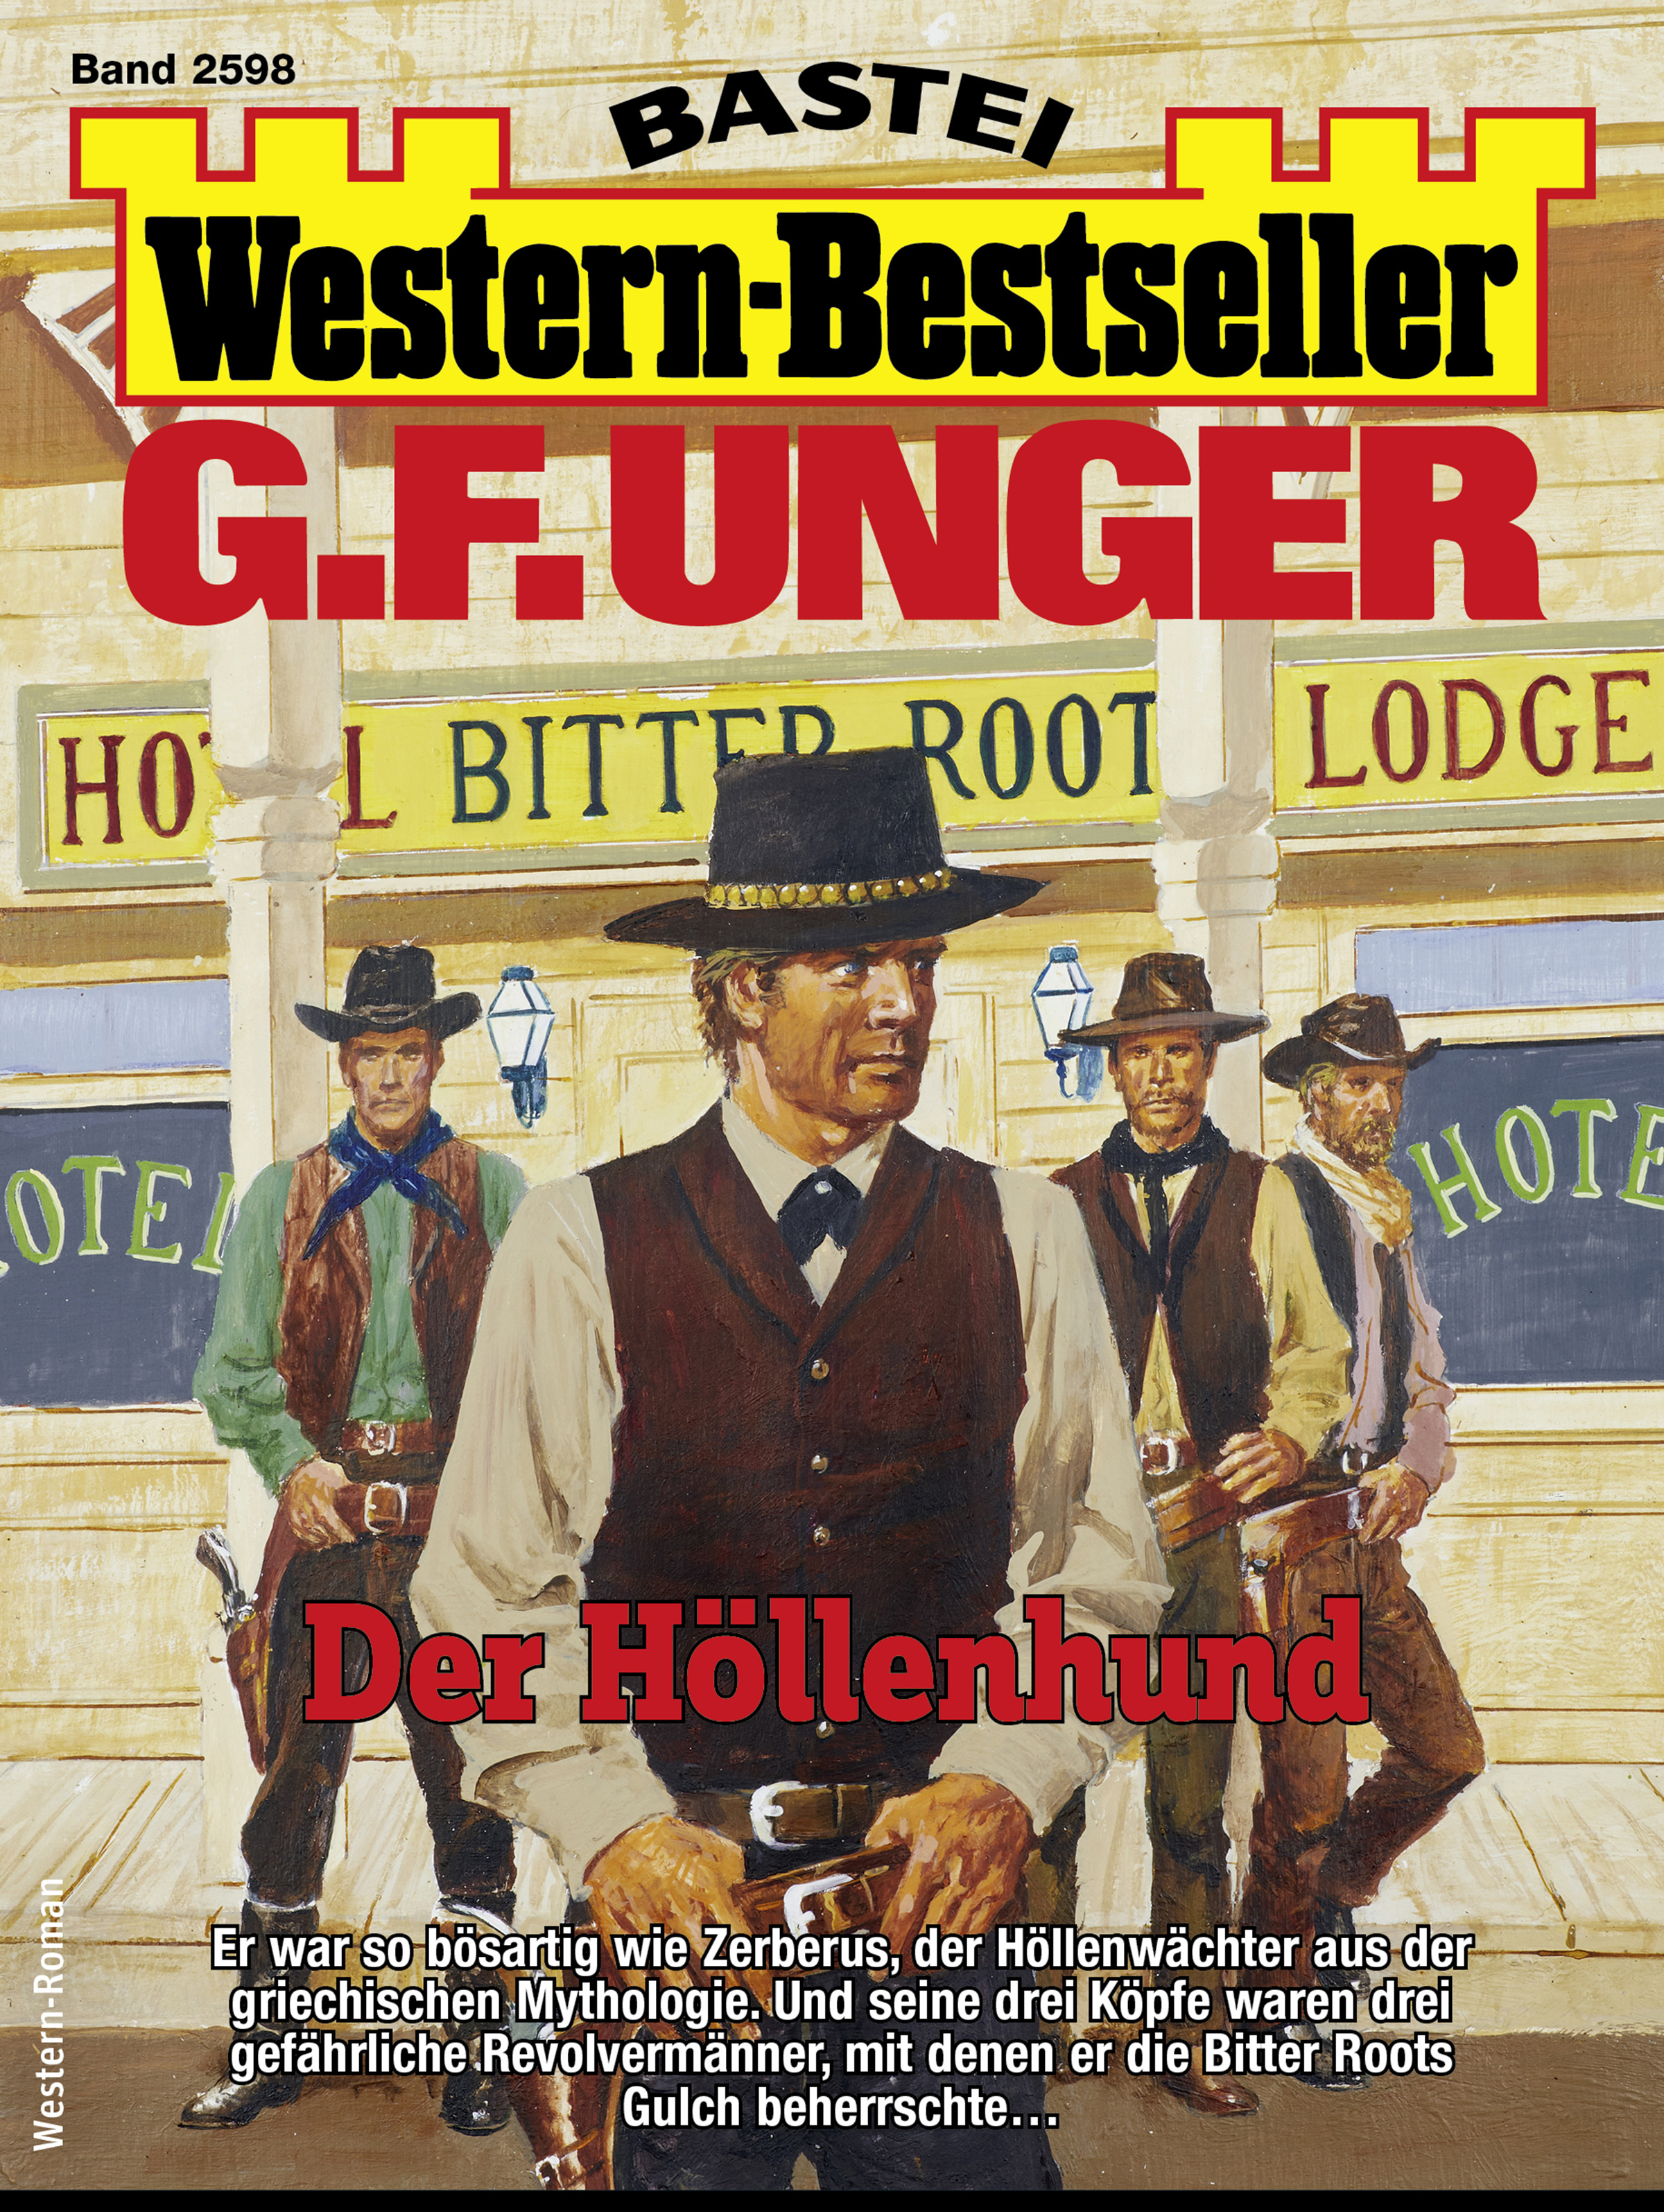 G. F. Unger Western-Bestseller 2598